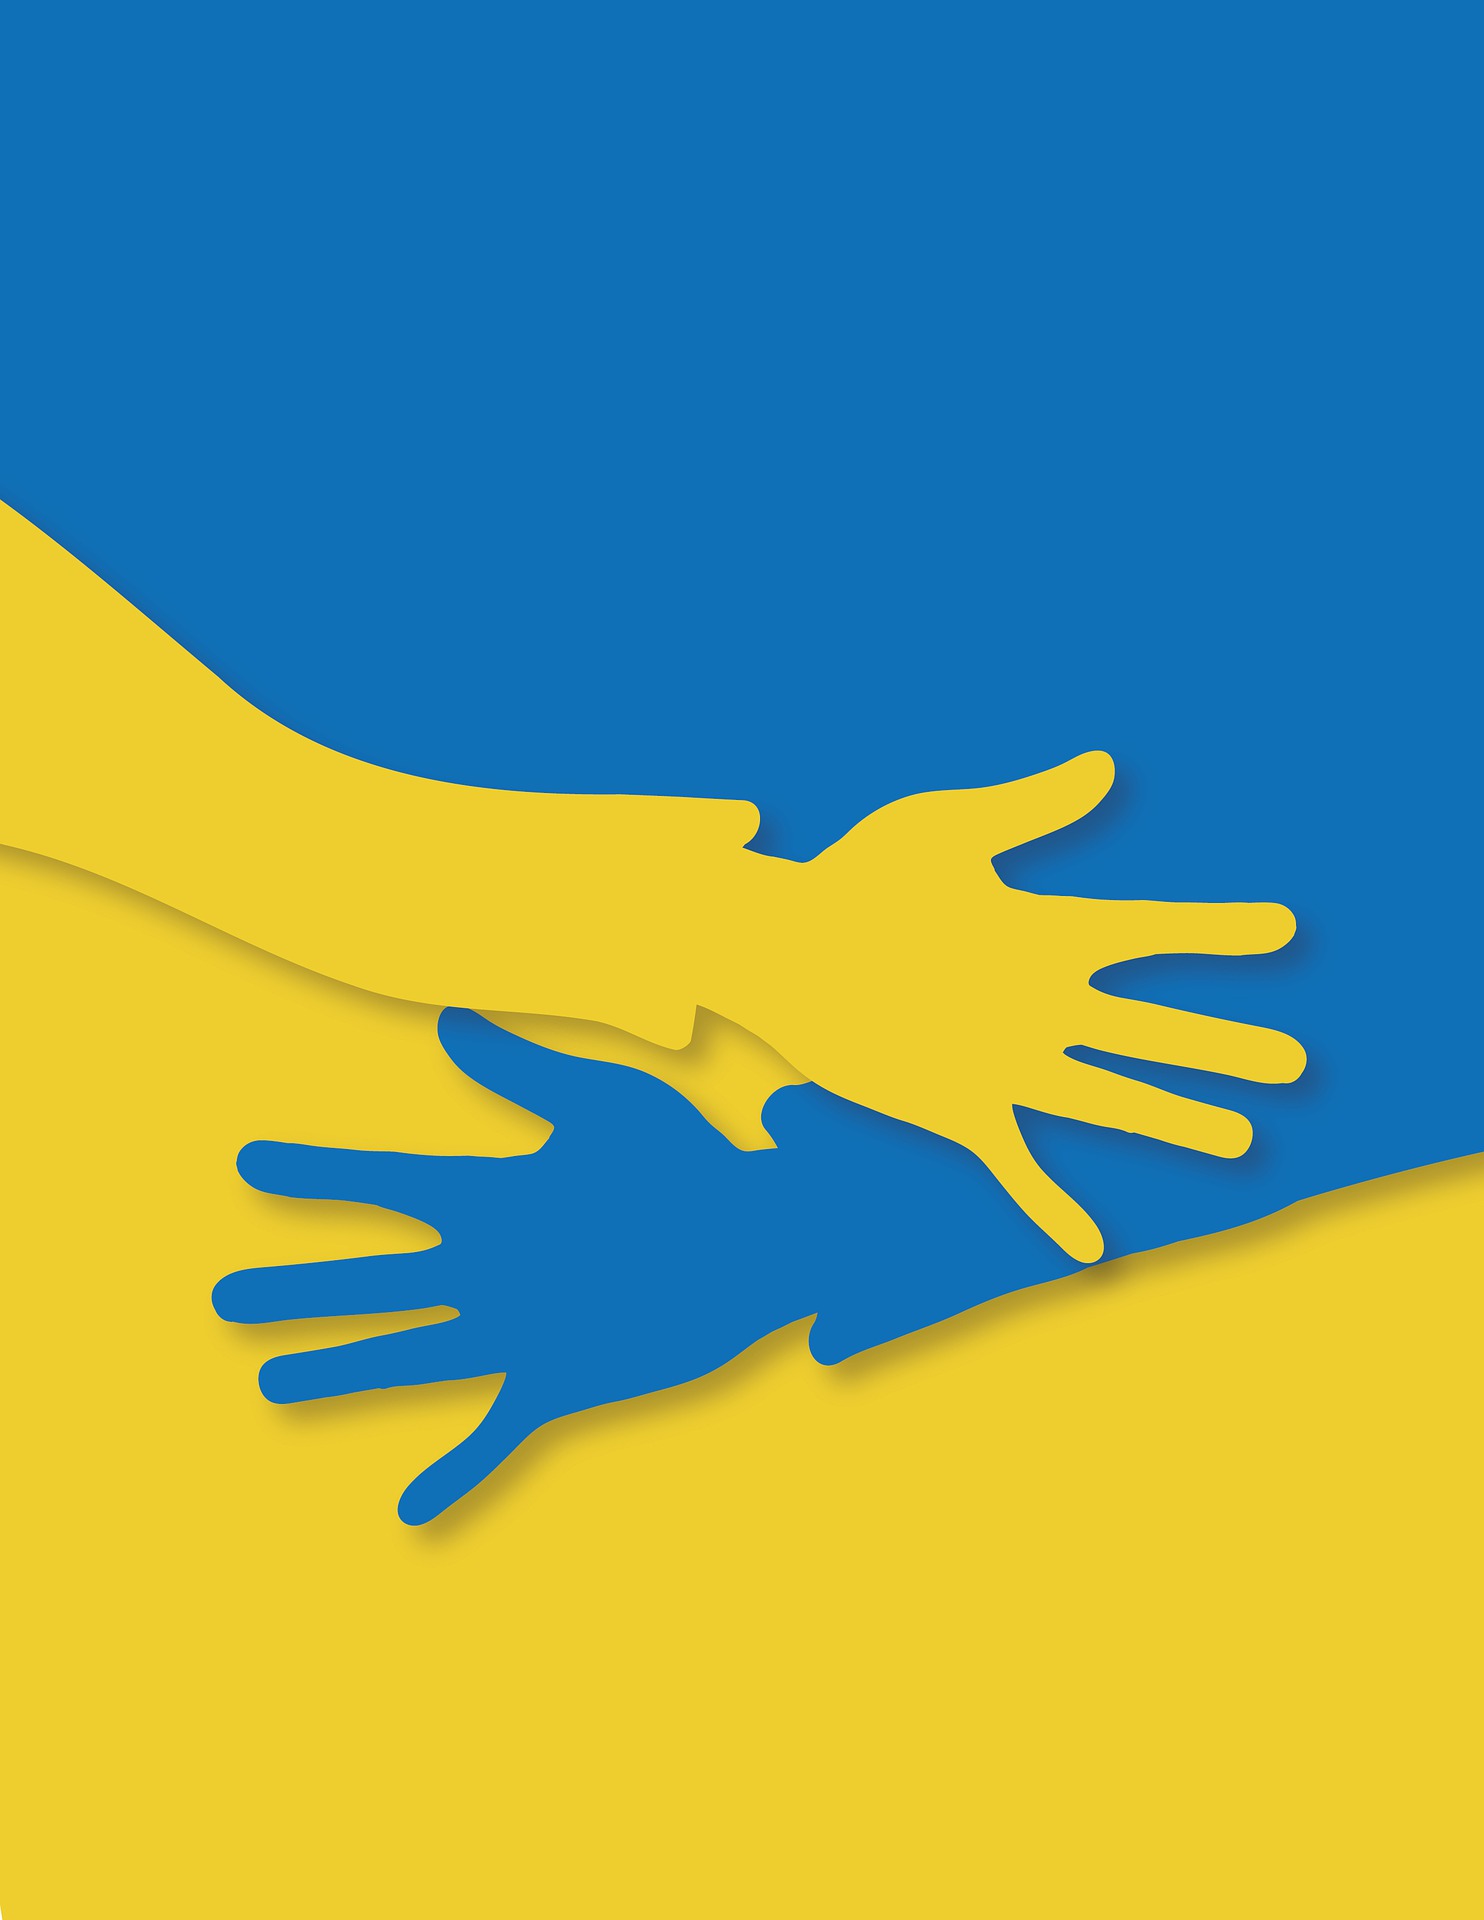 Ukraine languages uniting | Blog | Technical translation services